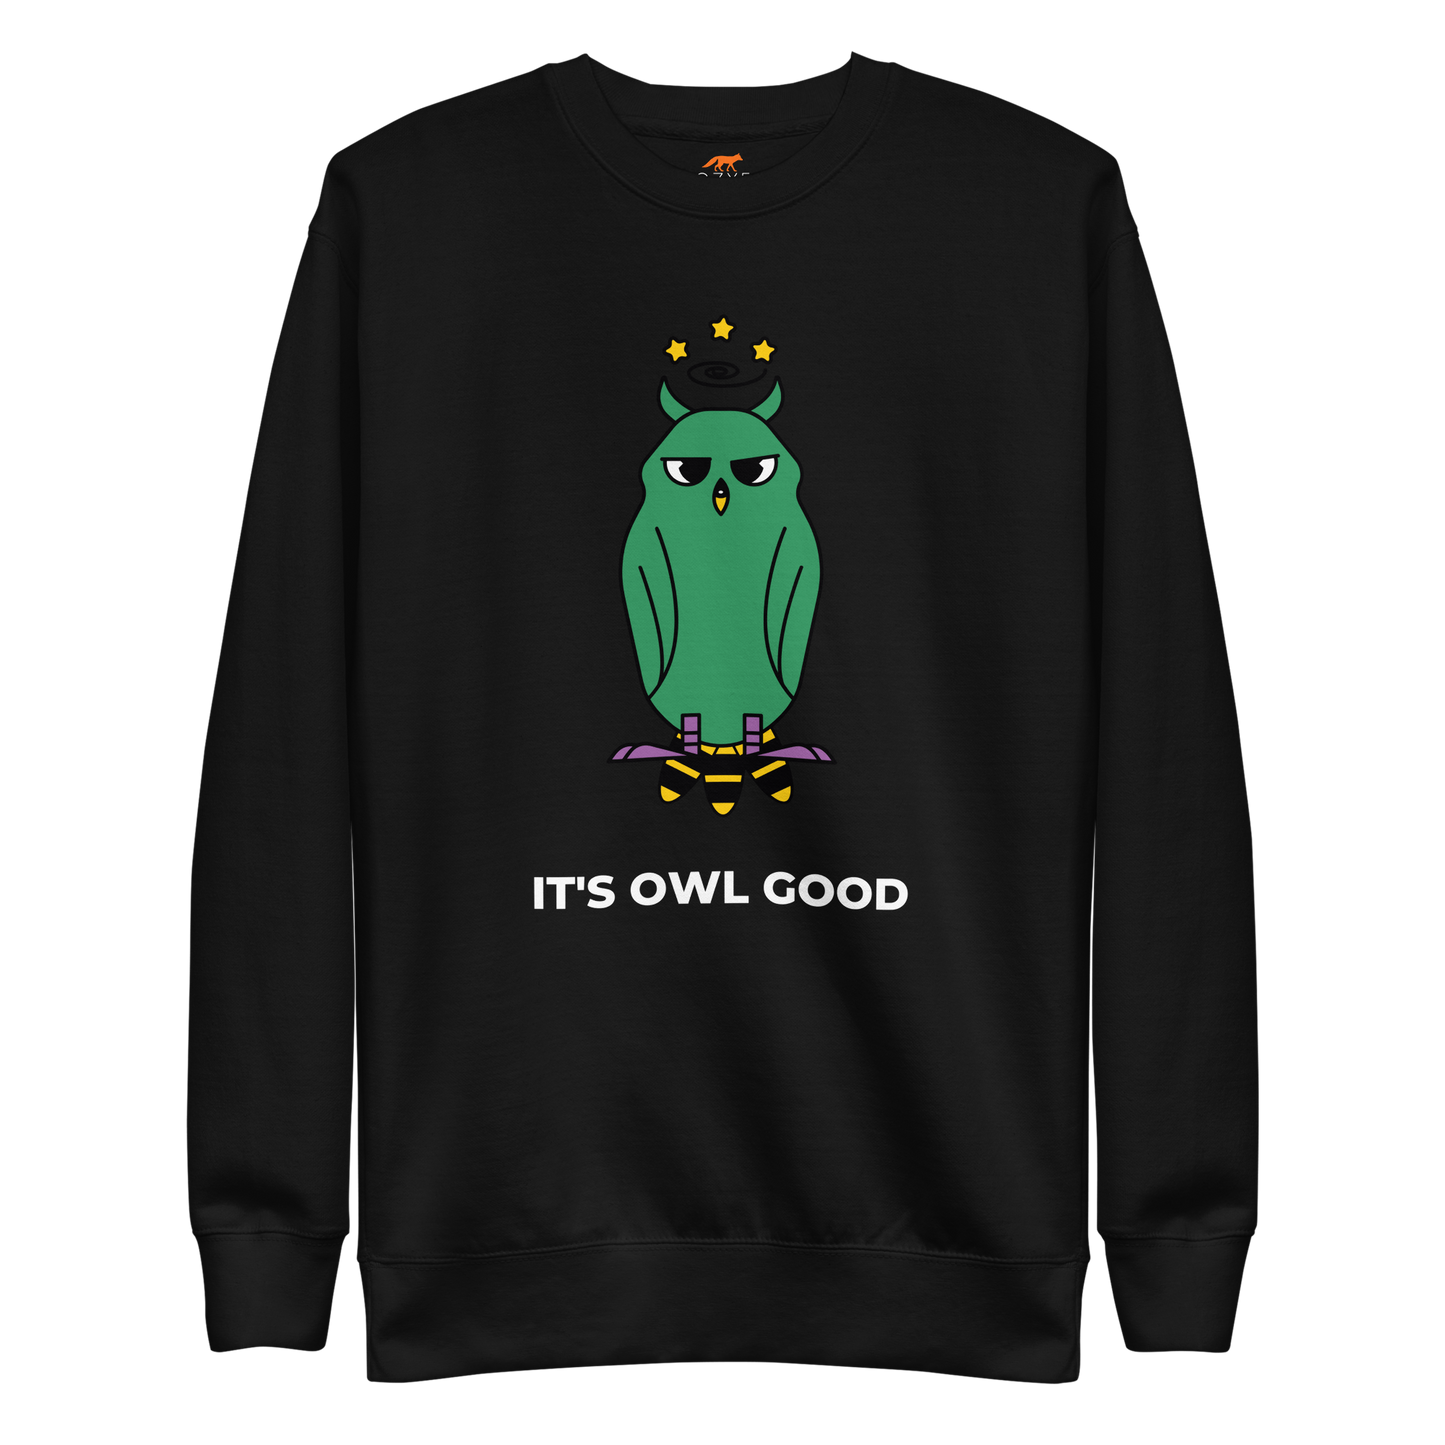 Black Premium Owl Sweatshirt featuring a hootin' cool It's Owl Good graphic on the chest - Funny Graphic Owl Sweatshirts - Boozy Fox